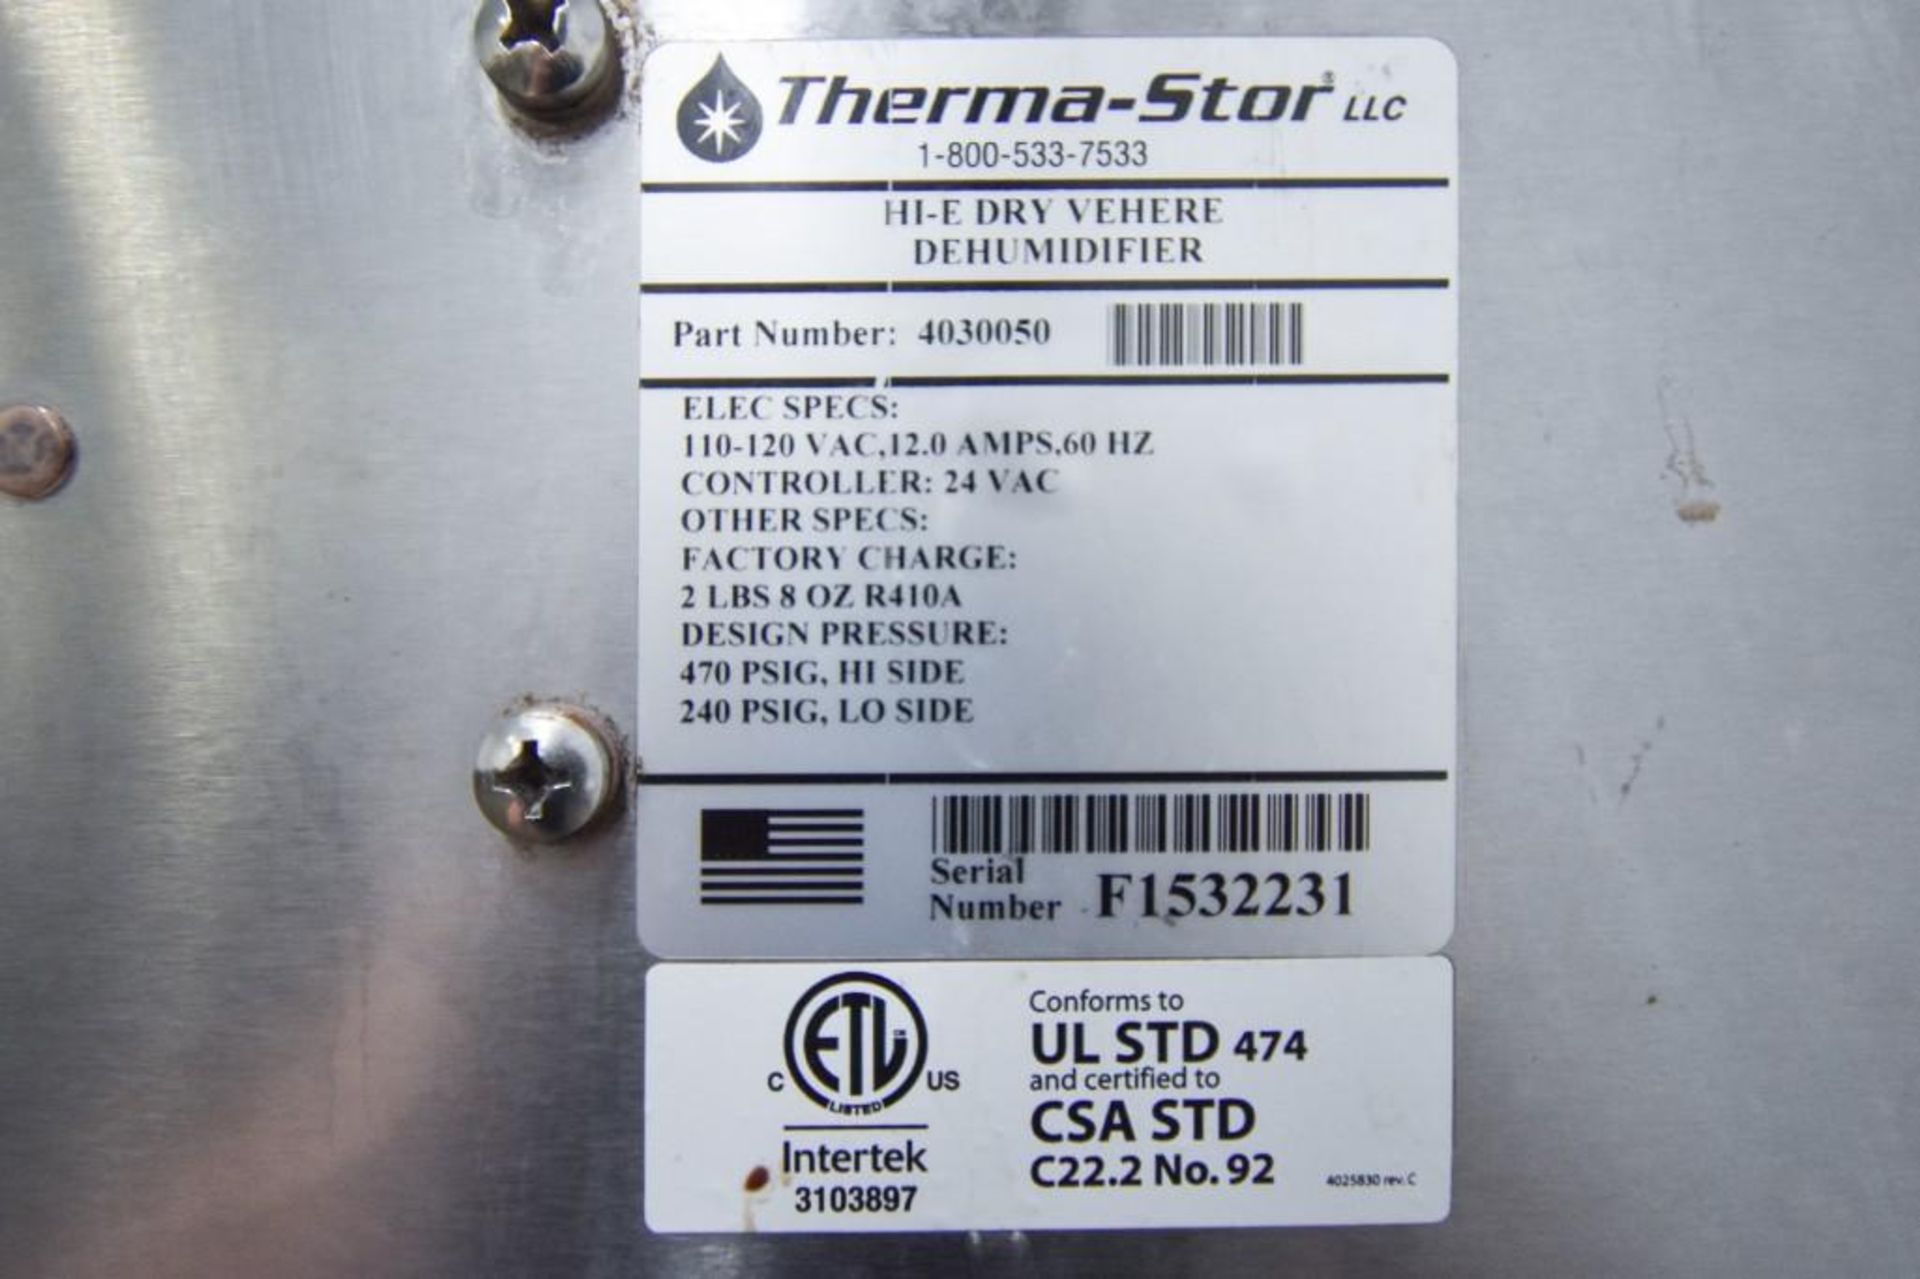 Hi-E Dry Vehere Thermastor - Image 3 of 3